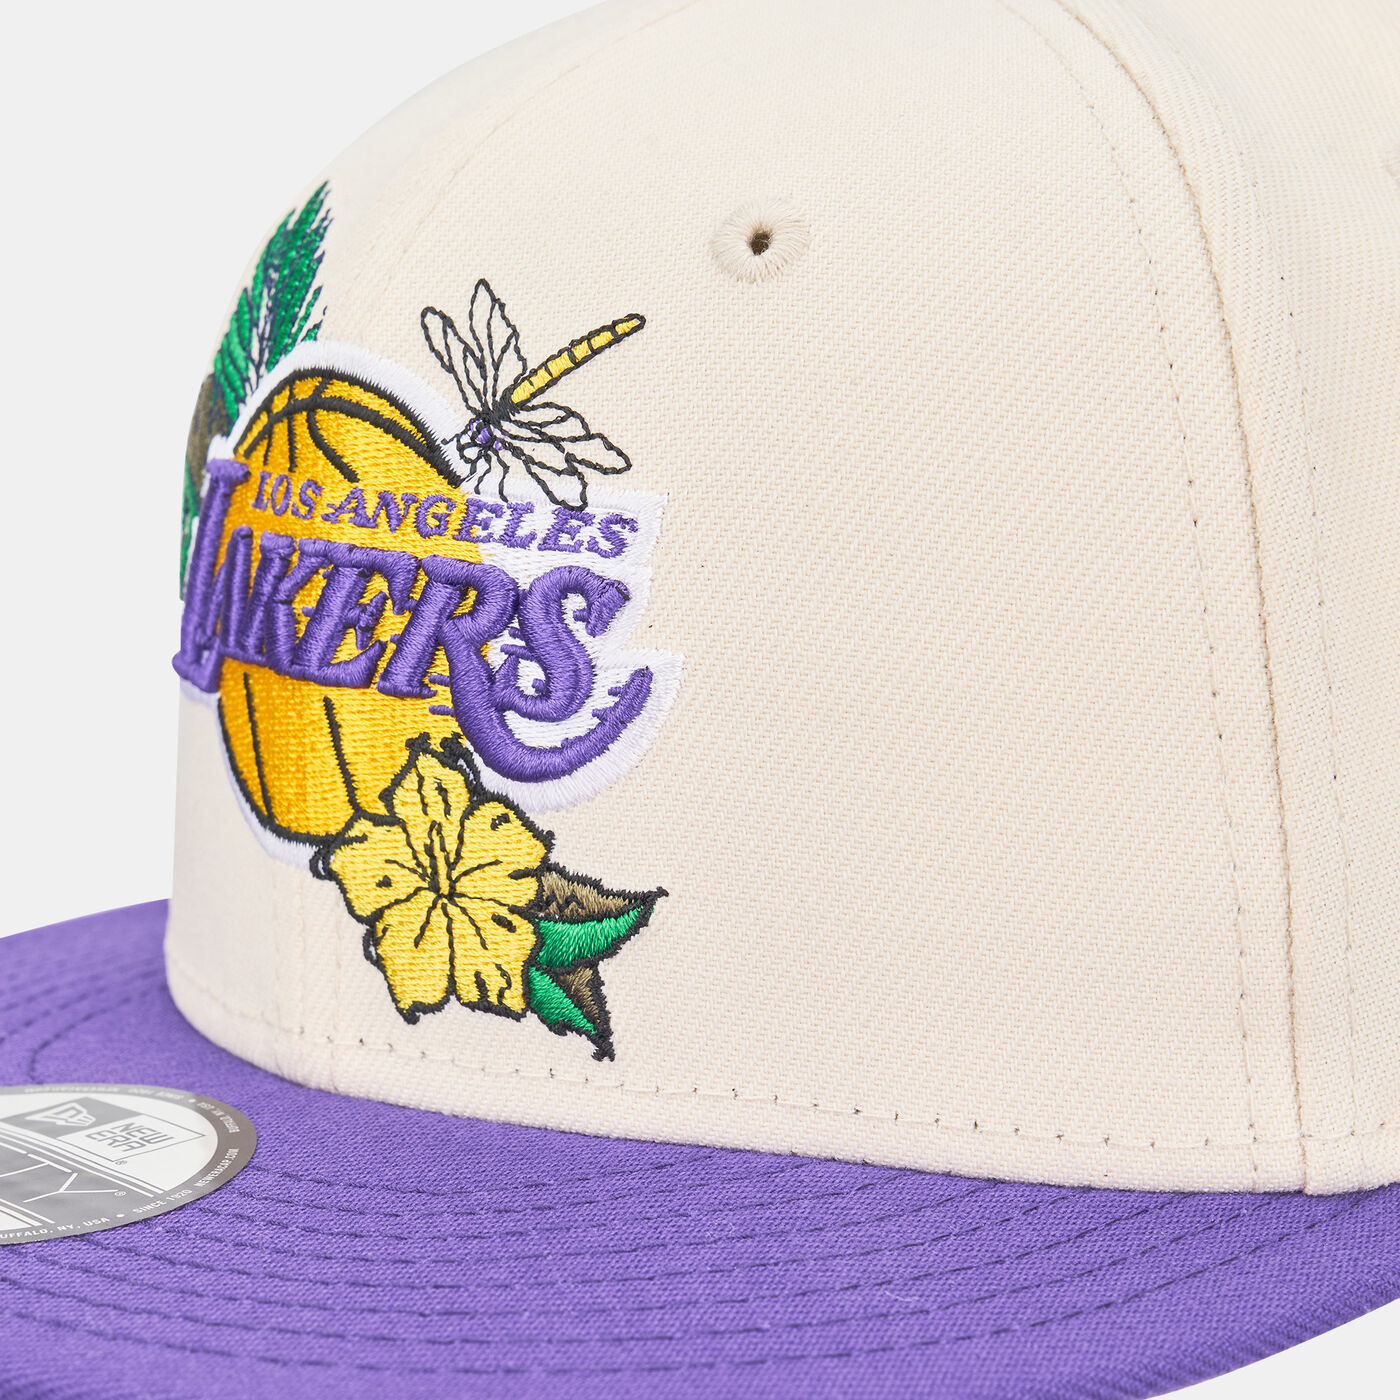 Men's NBA Los Angeles Lakers Floral 9FIFTY Cap